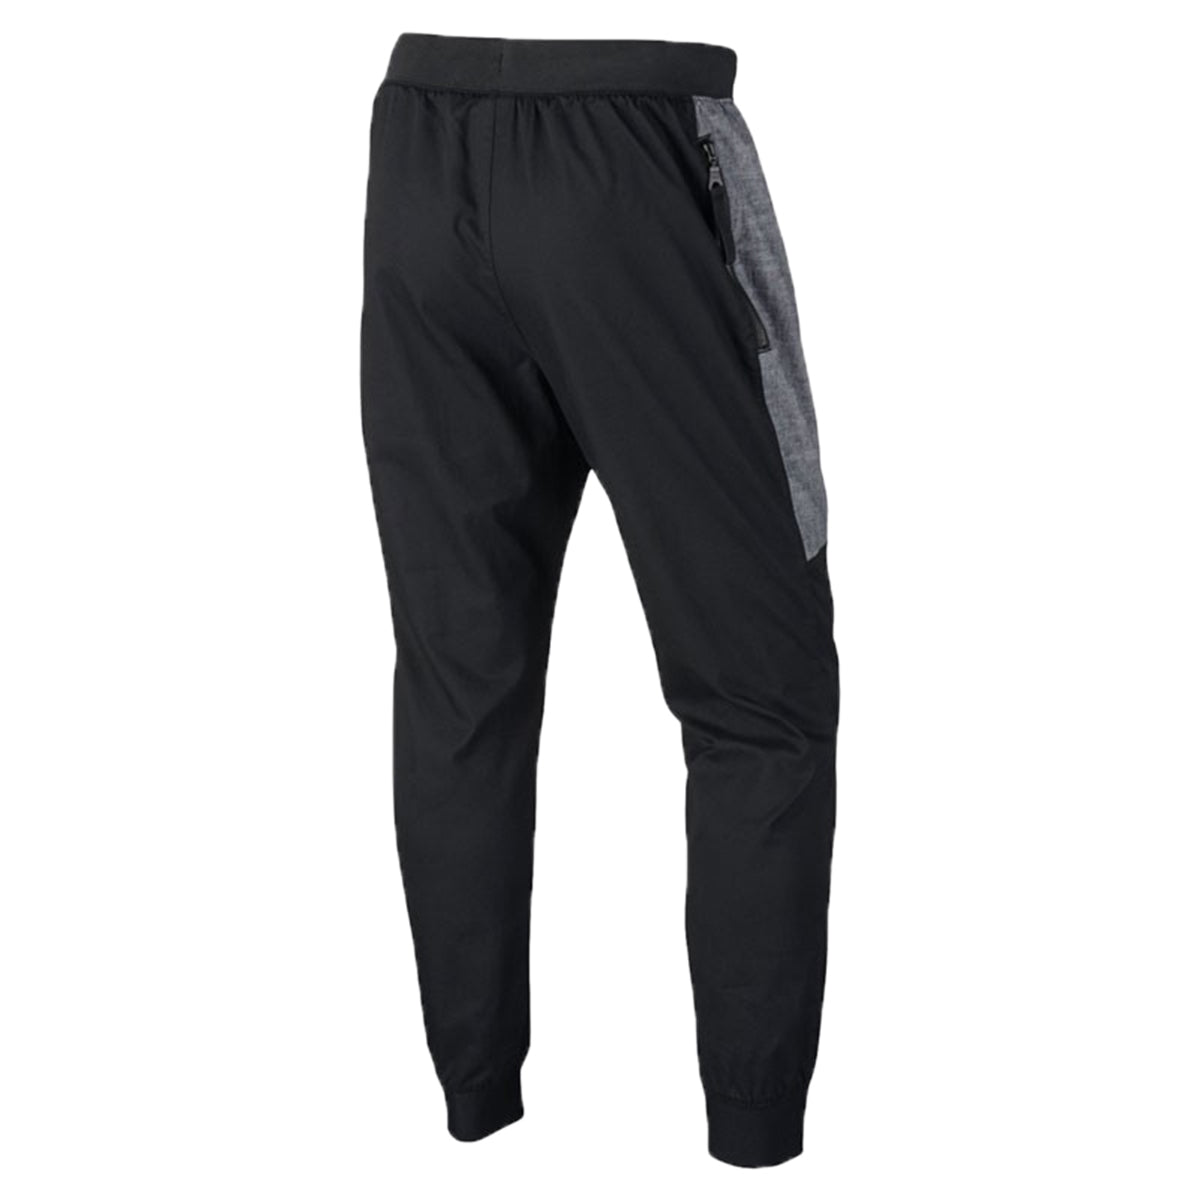 Nike International Sweatpants Mens Style : 831134